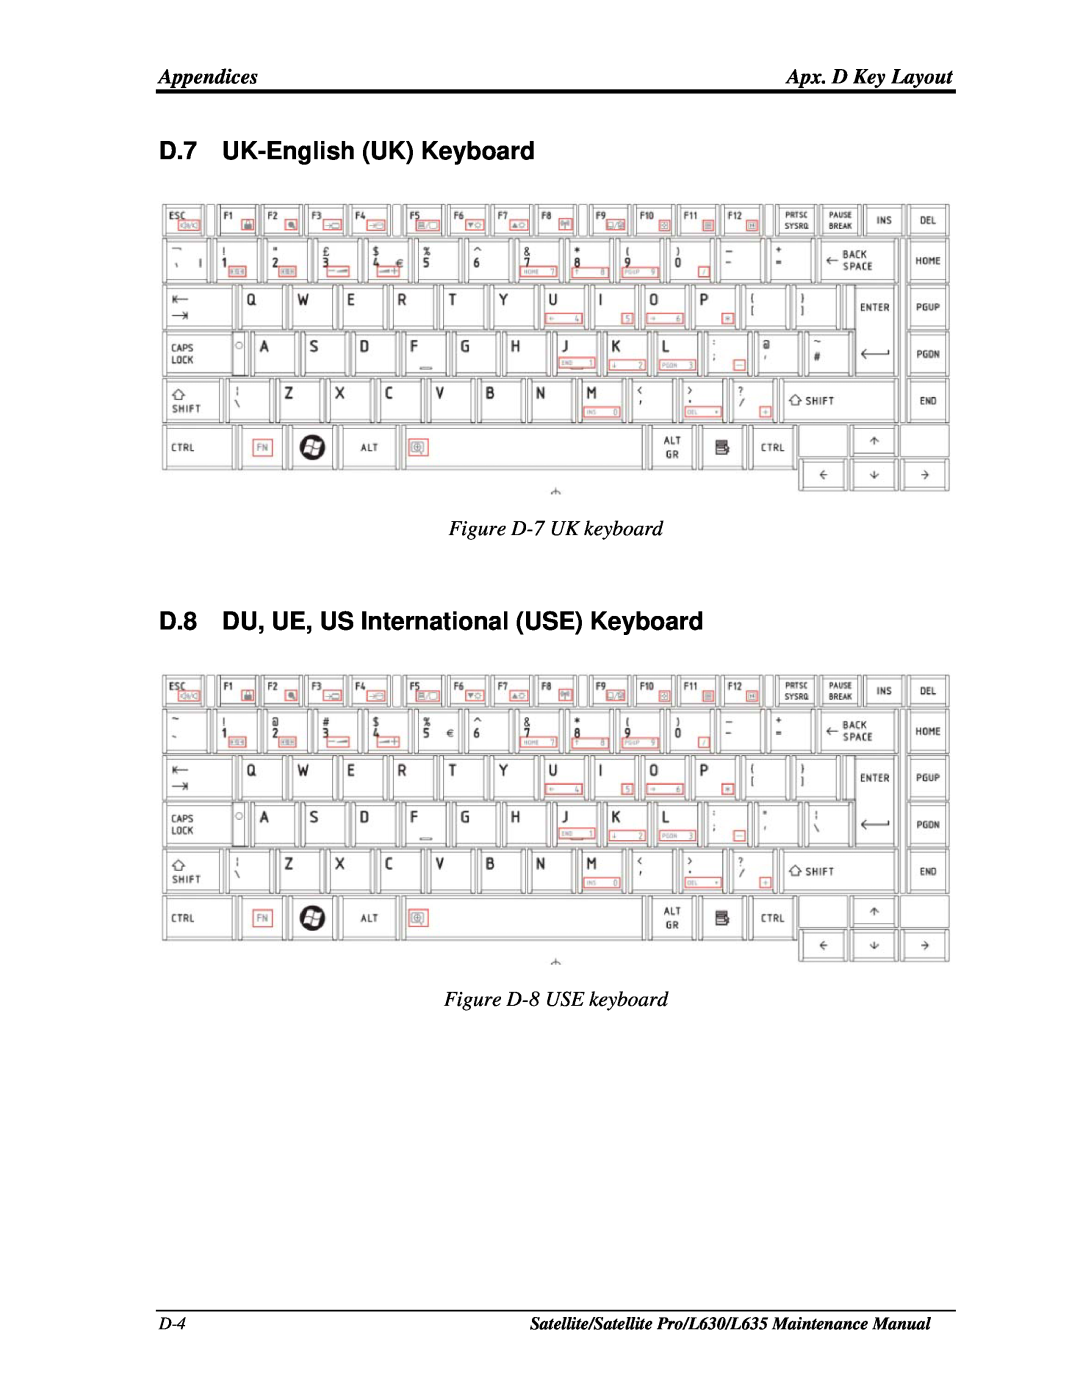 Toshiba L630, L635 manual D.7 UK-English UK Keyboard, D.8 DU, UE, US International USE Keyboard, Figure D-7 UK keyboard 